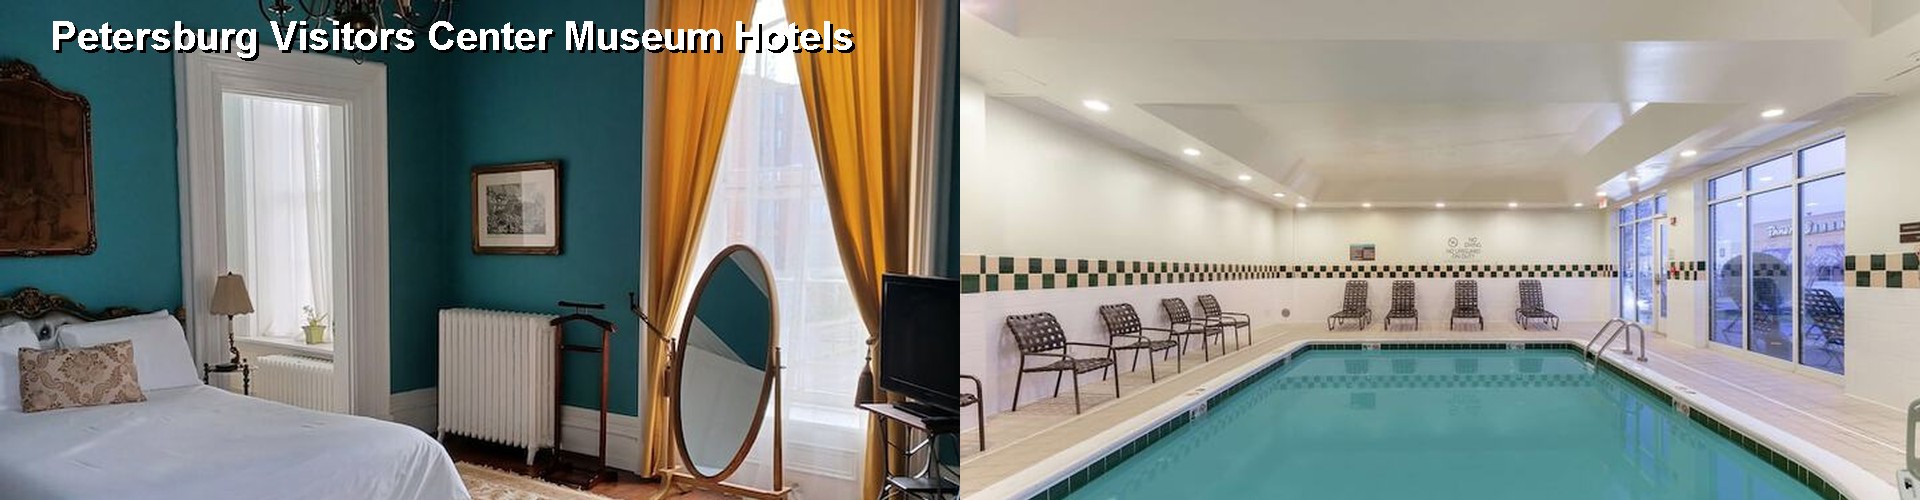 2 Best Hotels near Petersburg Visitors Center Museum